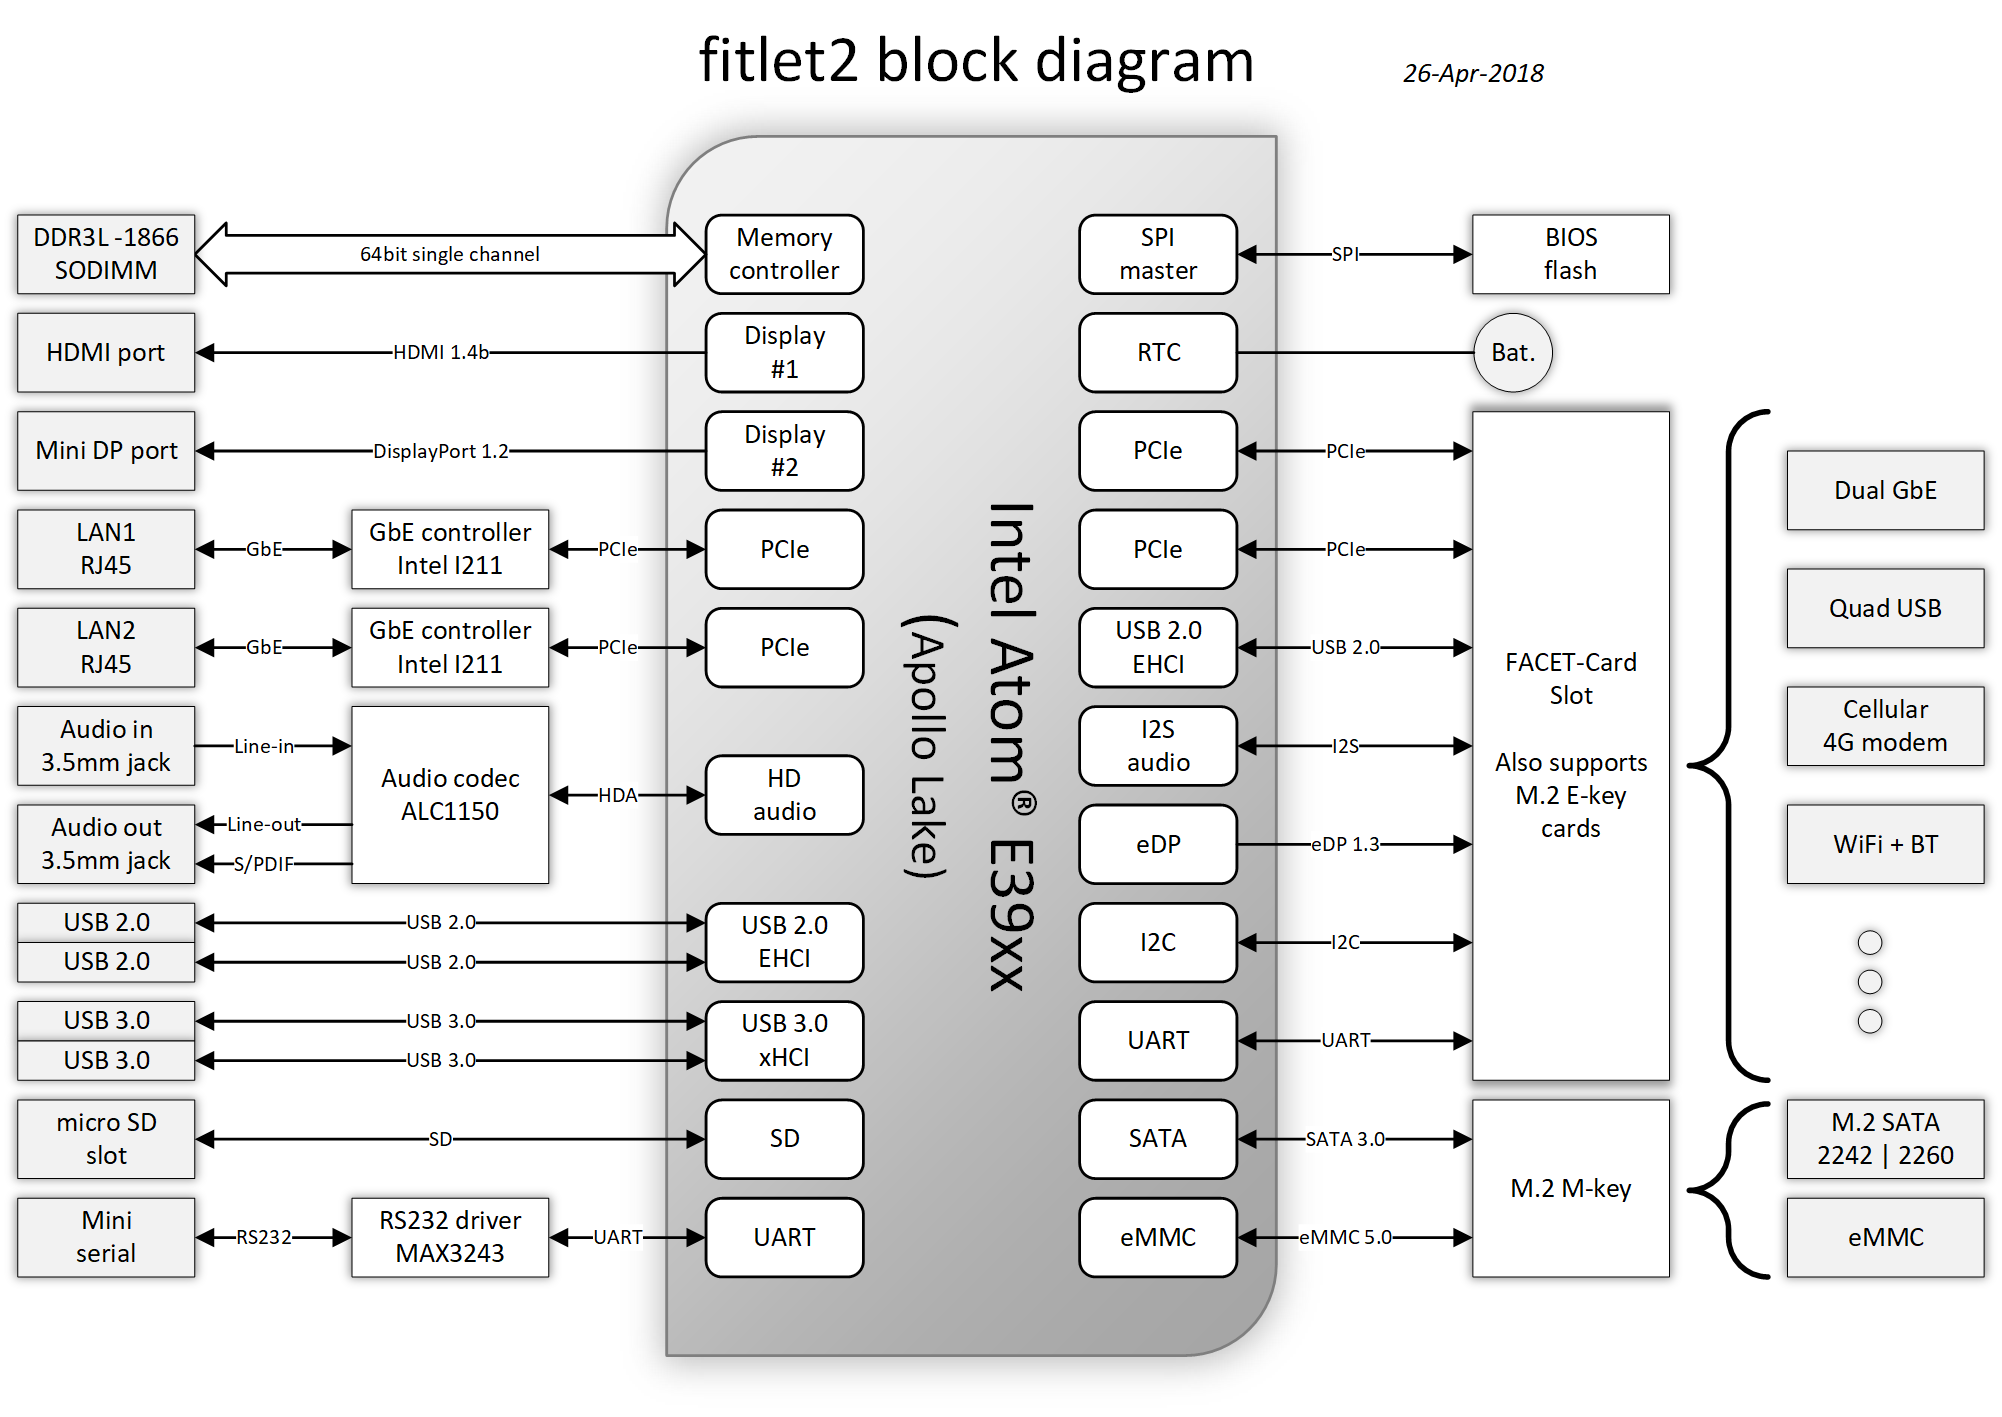 fitlet2 block diagram